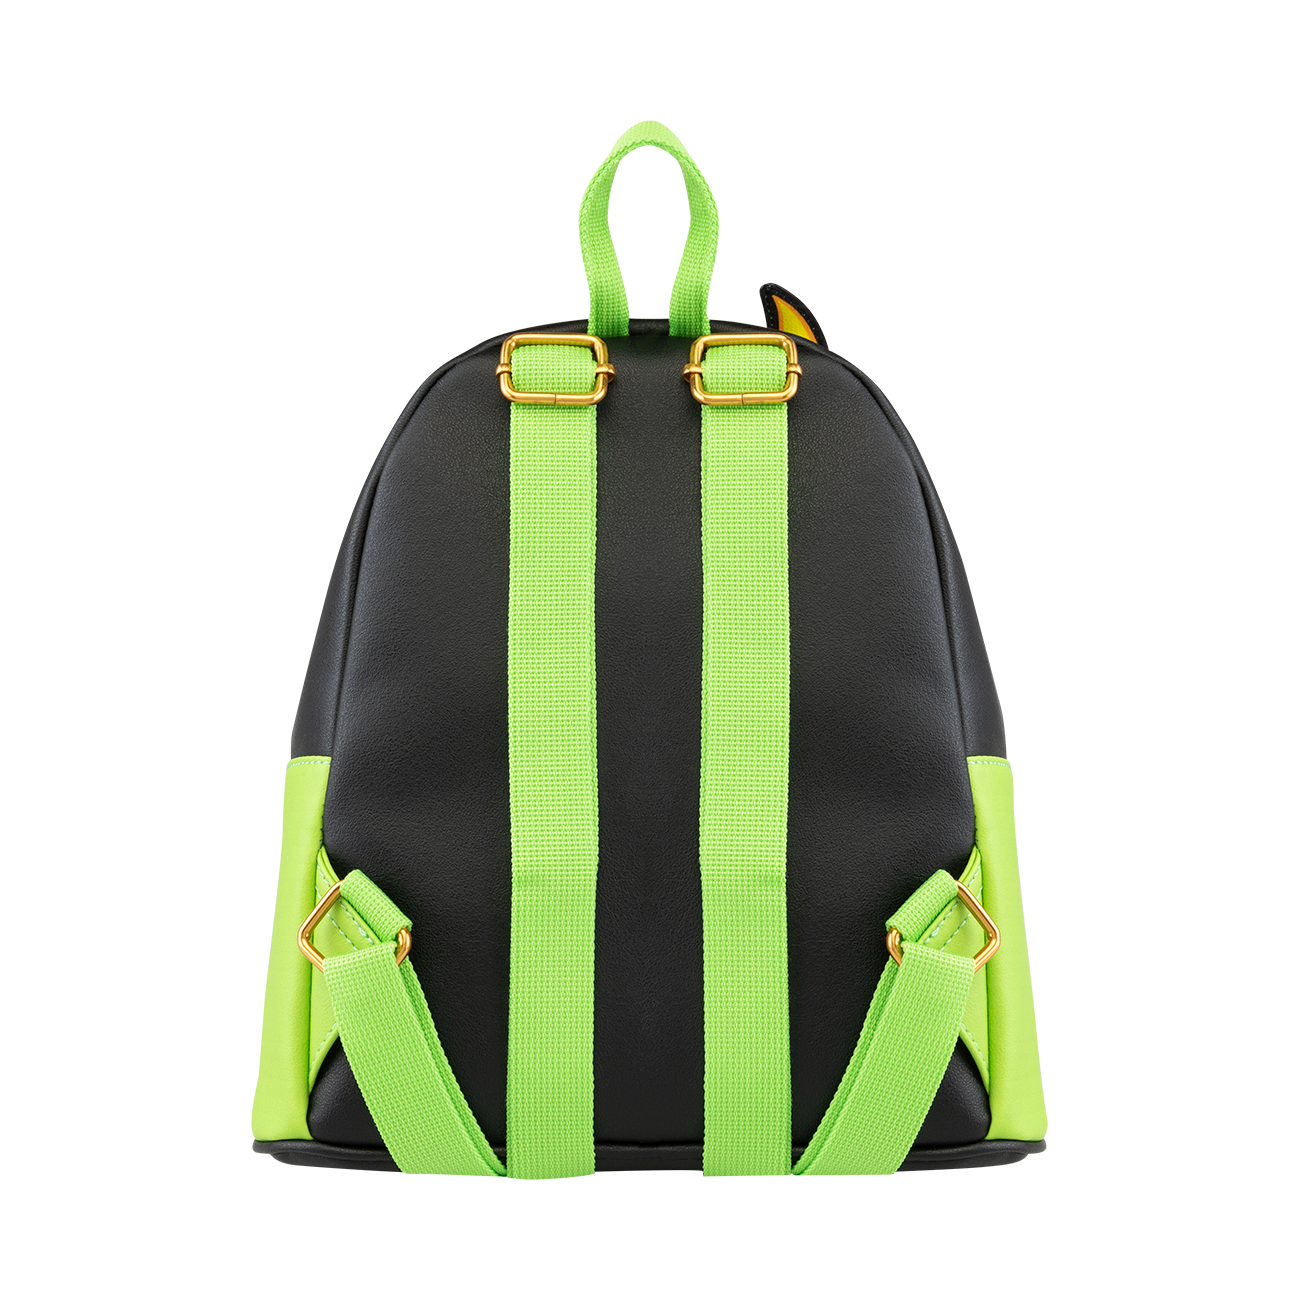 Sylvie Black light Cosplay Mini Backpack back